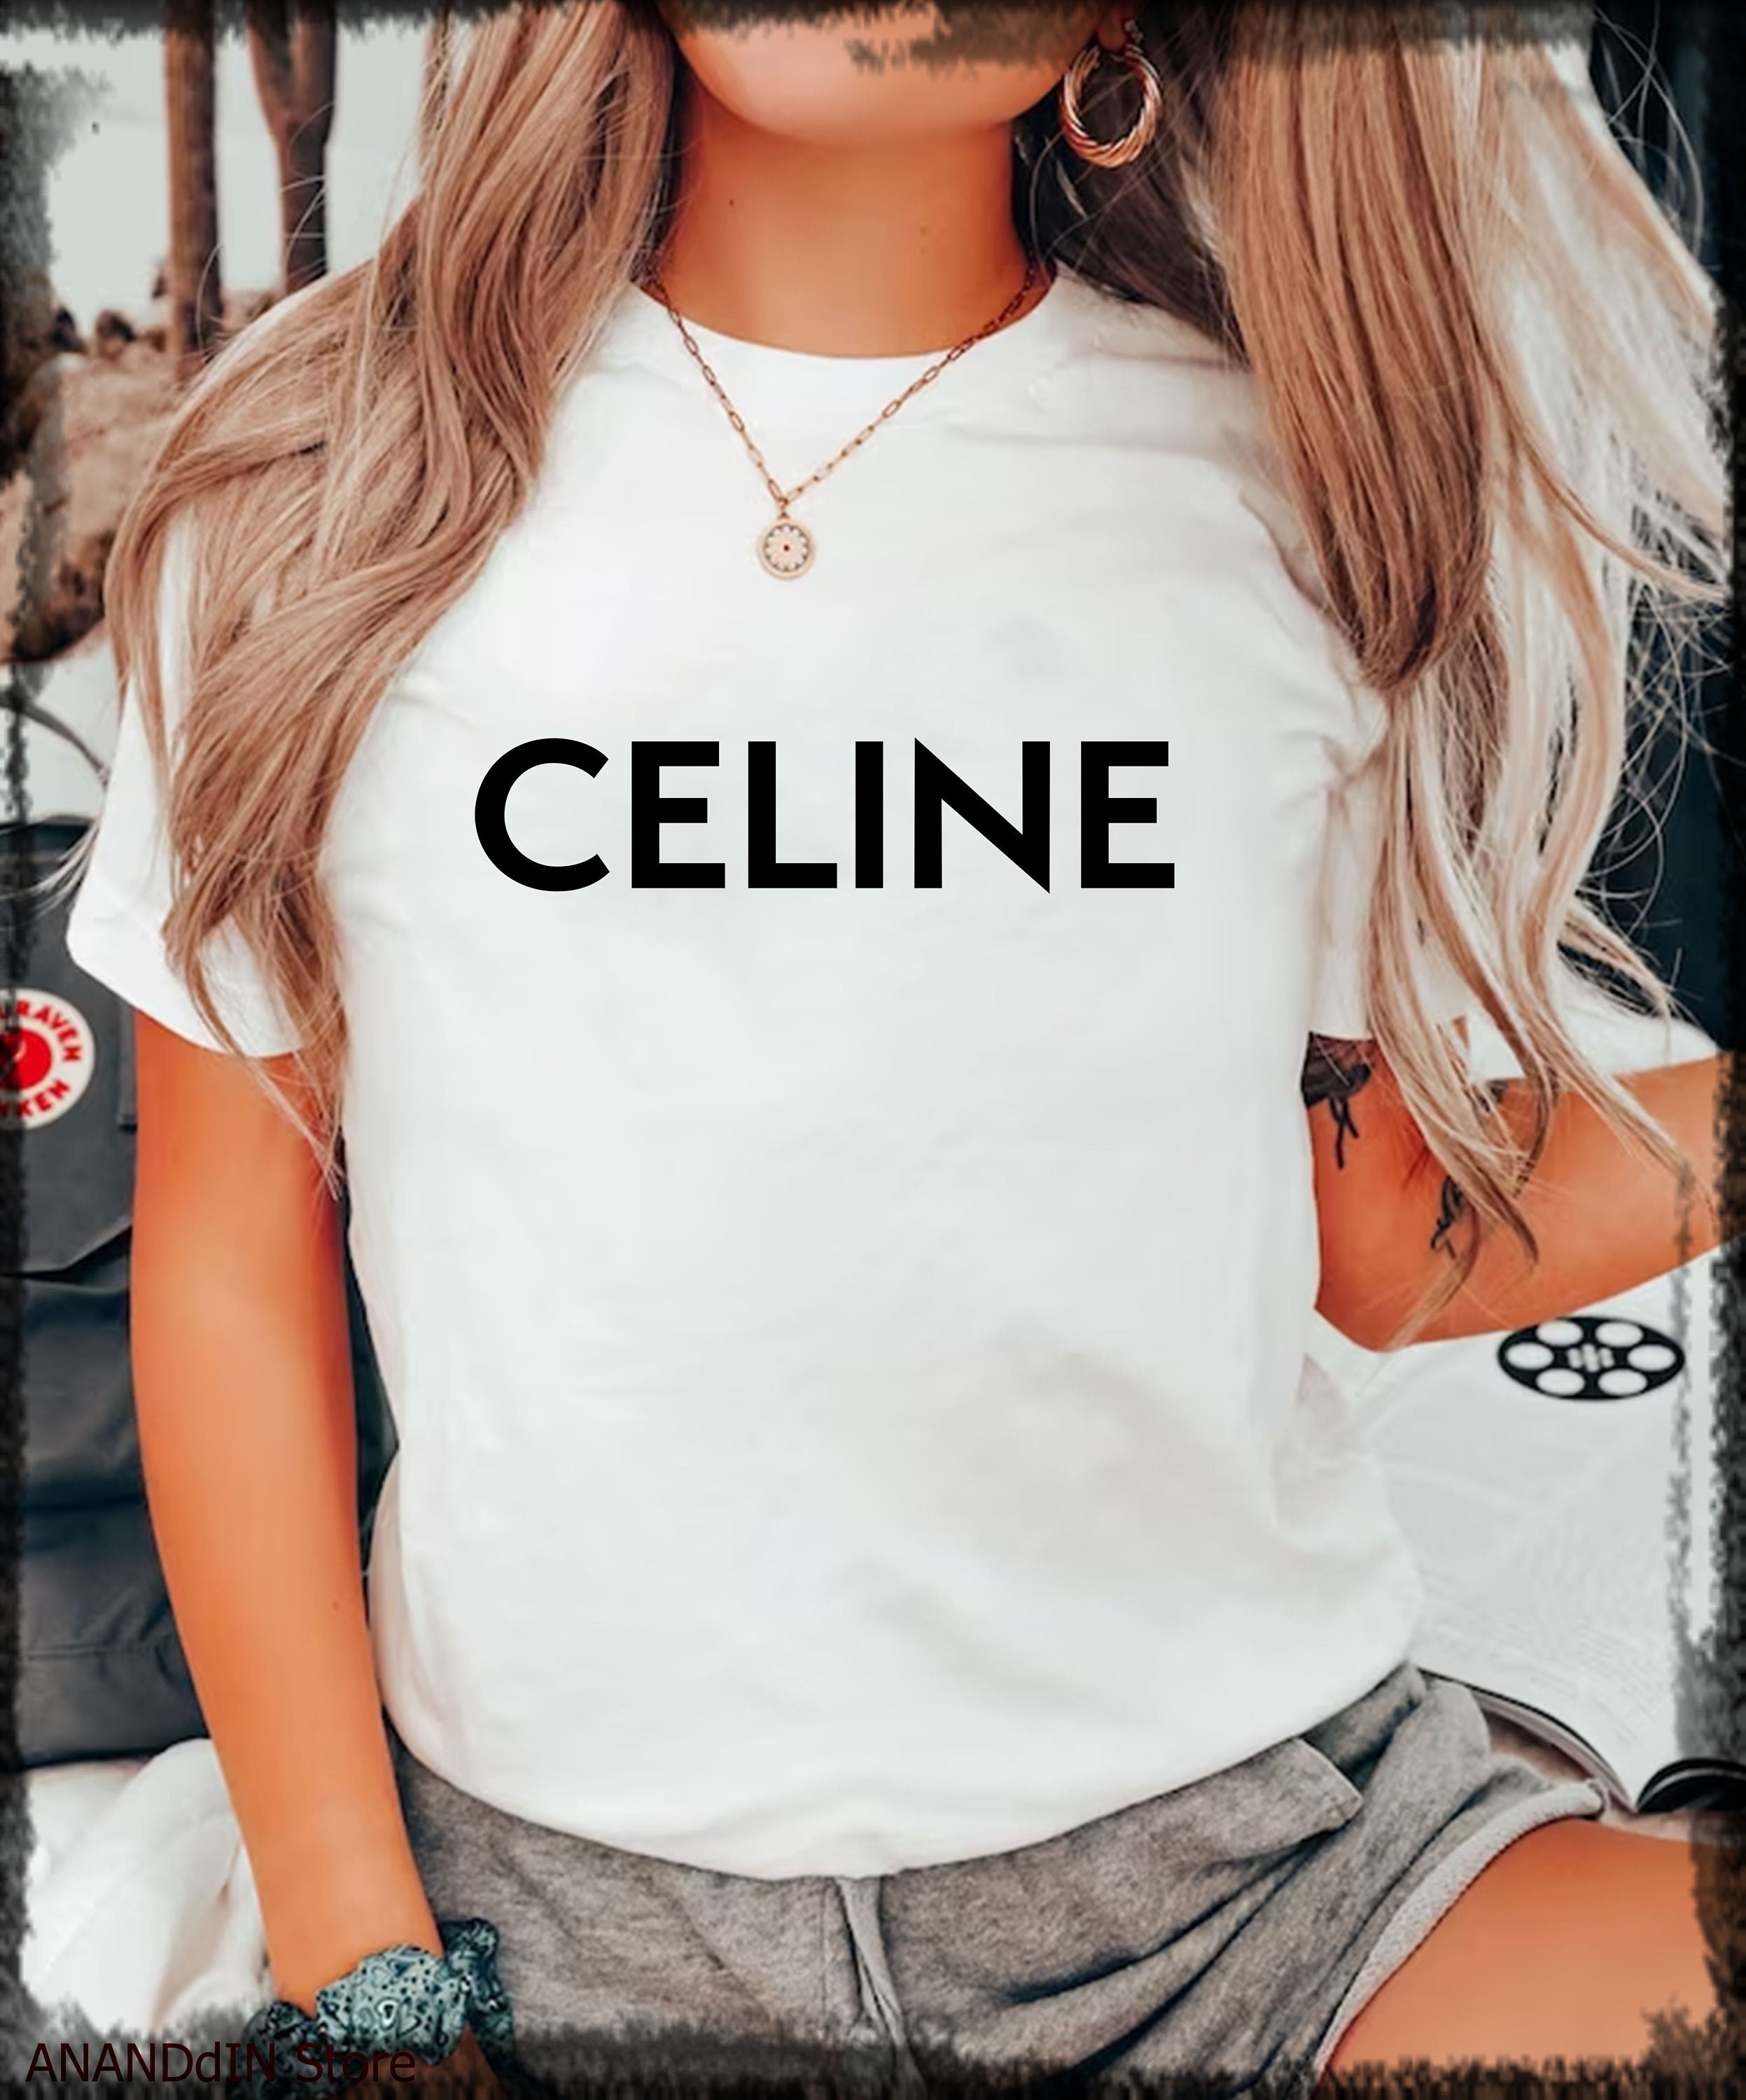 Cheap Celine 16 Paris T Shirt, Celine T Shirt For Women Man - Allsoymade